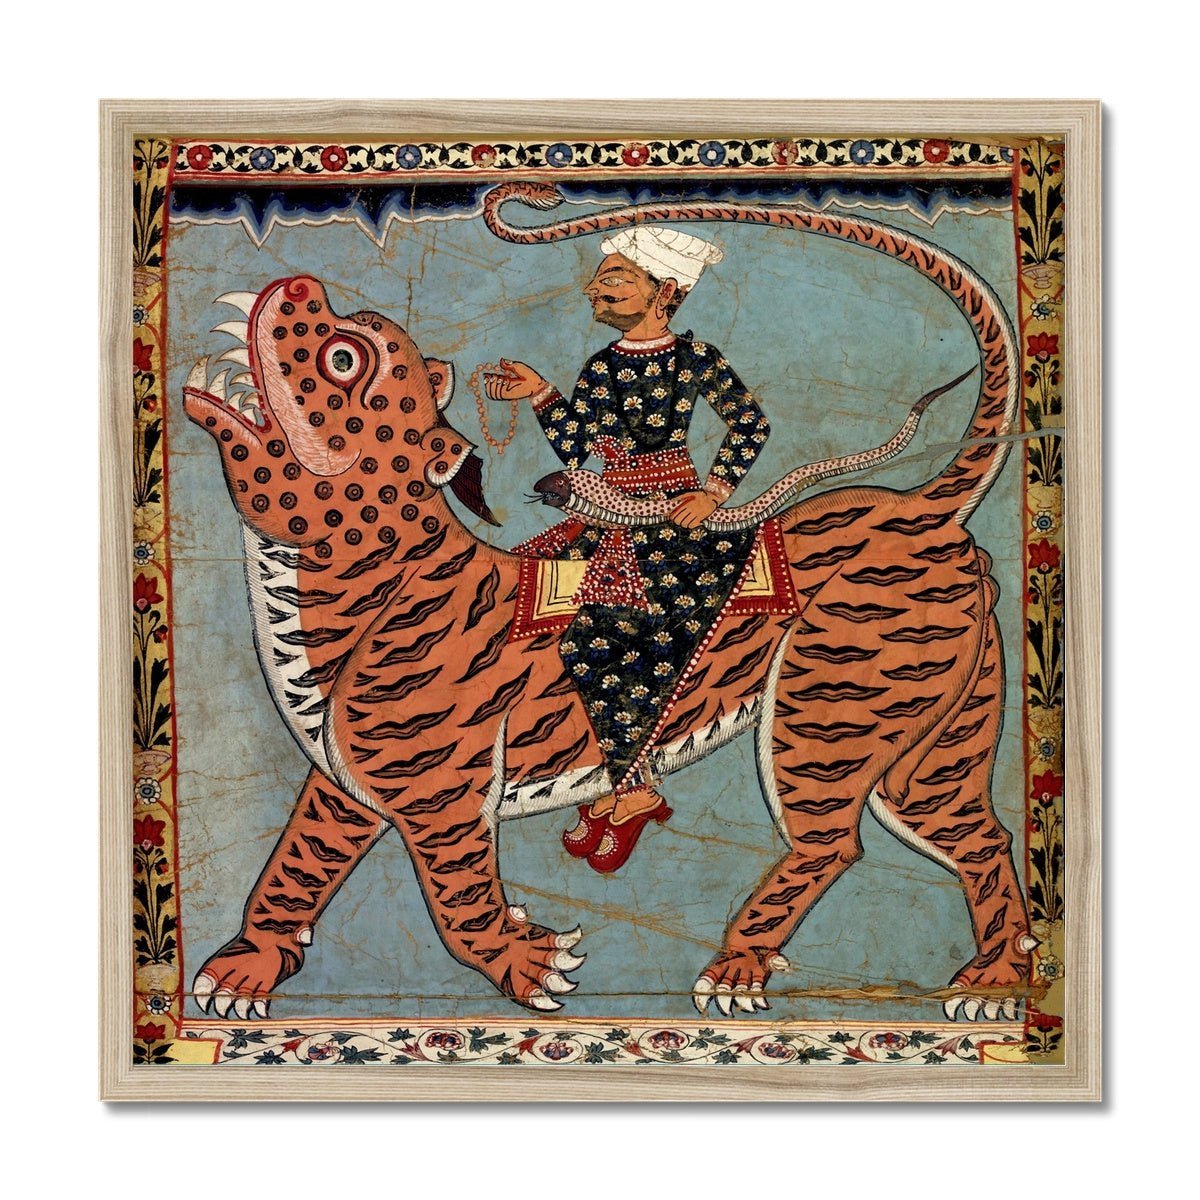 Fine art 12"x12" / Natural Frame Pir Gazi and his Tiger, Indian Art, Islamic Art, Muslim Art, Antique Sufi Rumi Mystic Cat Feline Framed Art Print